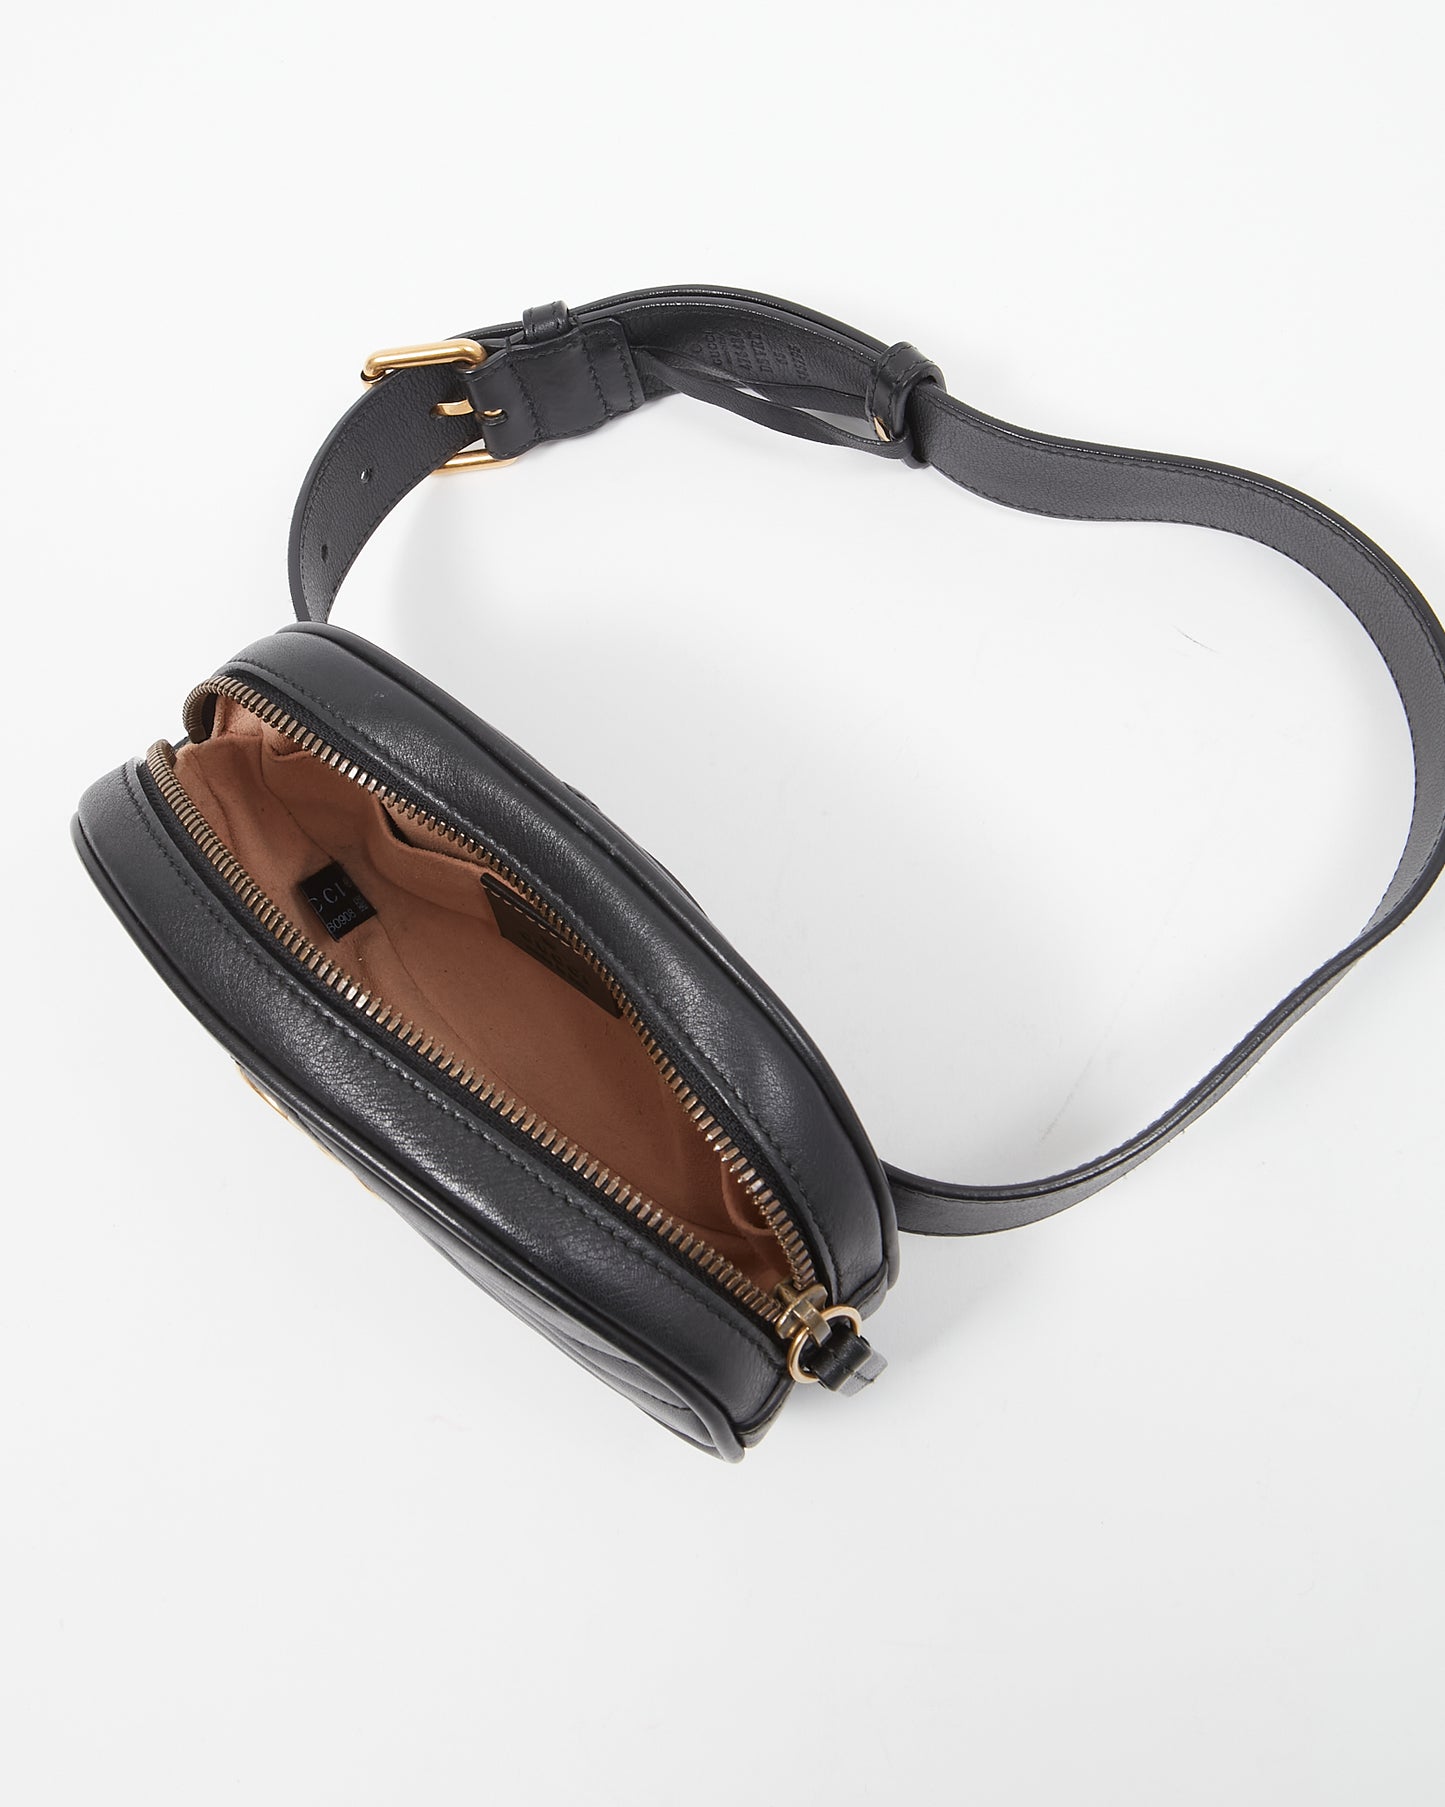 Gucci Black Leather GG Marmont Matelasse Belt Bag - 65/XXS